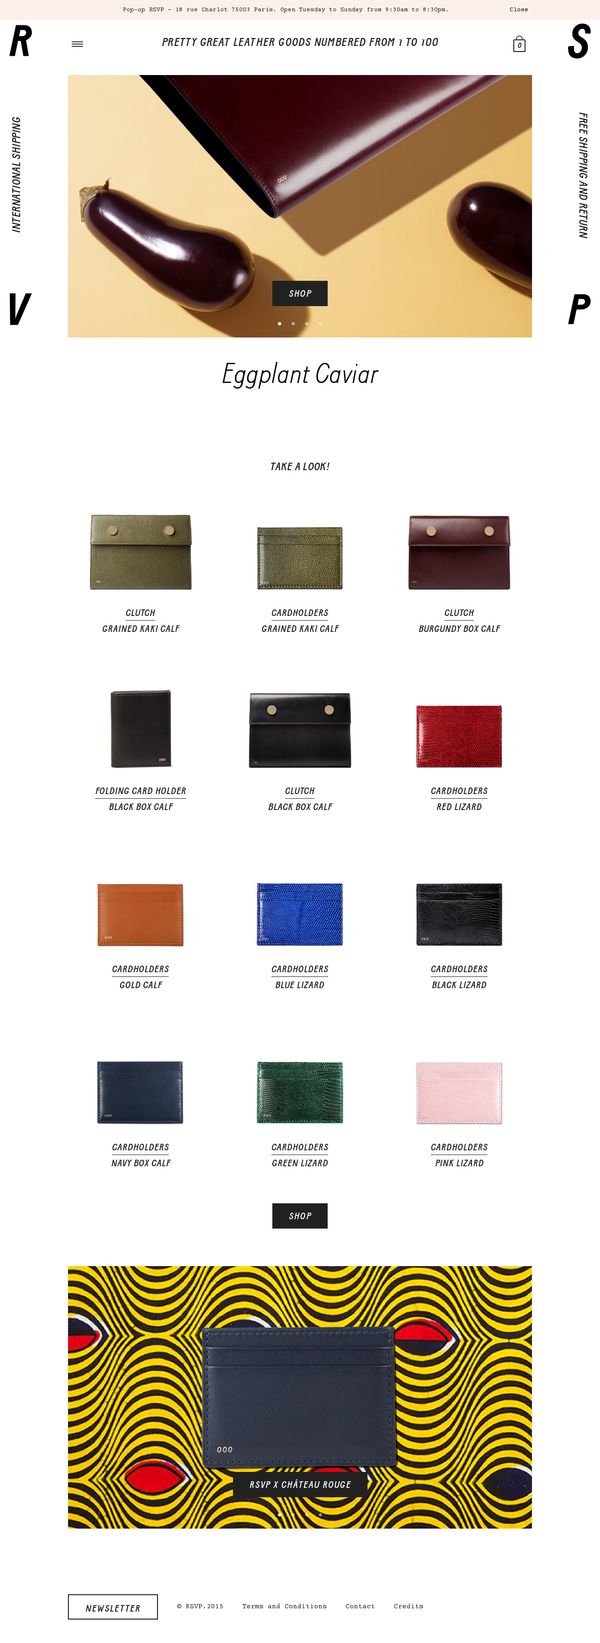 Top quality leather goods | RSVP Paris